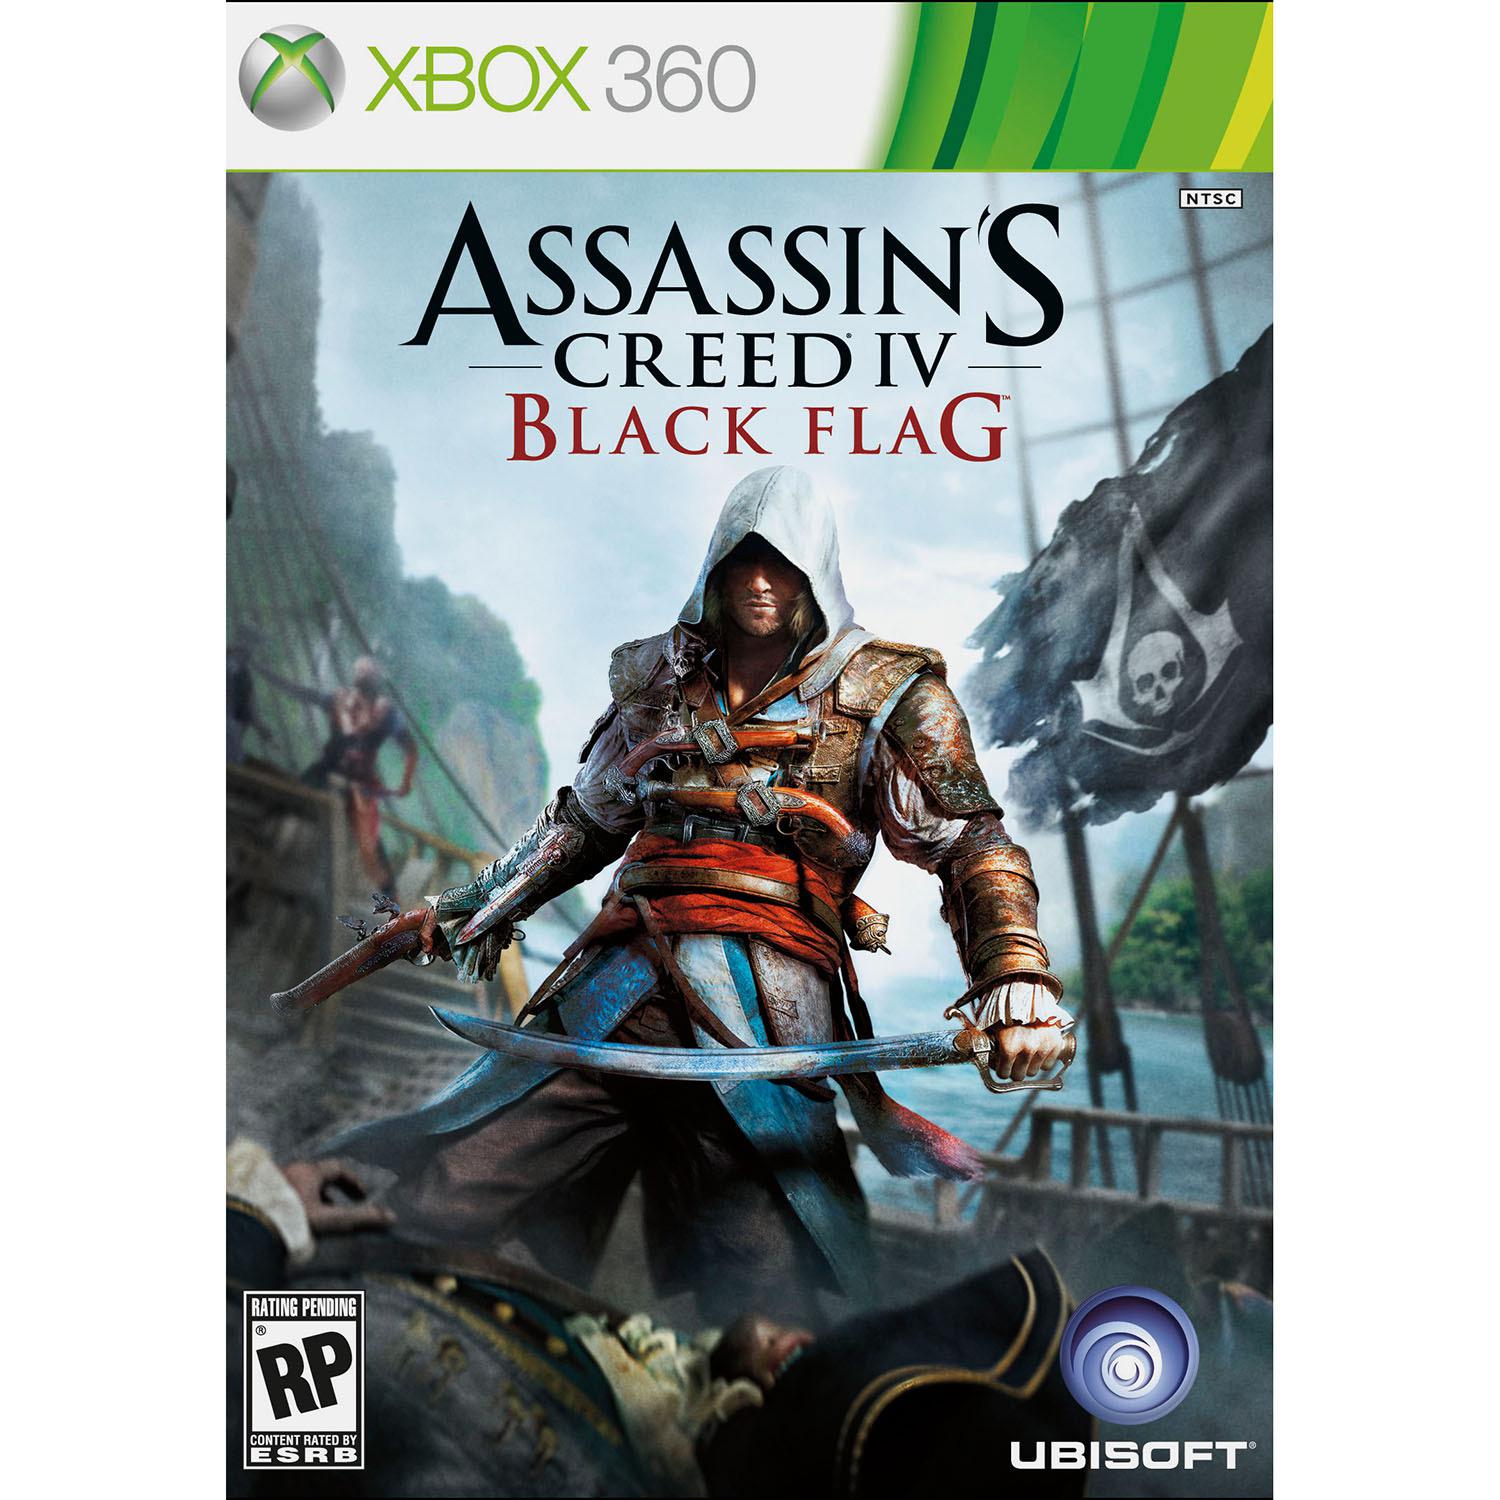 Game Assassin's Creed IV: Black Flag Limited Edition - Xbox 360 é bom? Vale a pena?